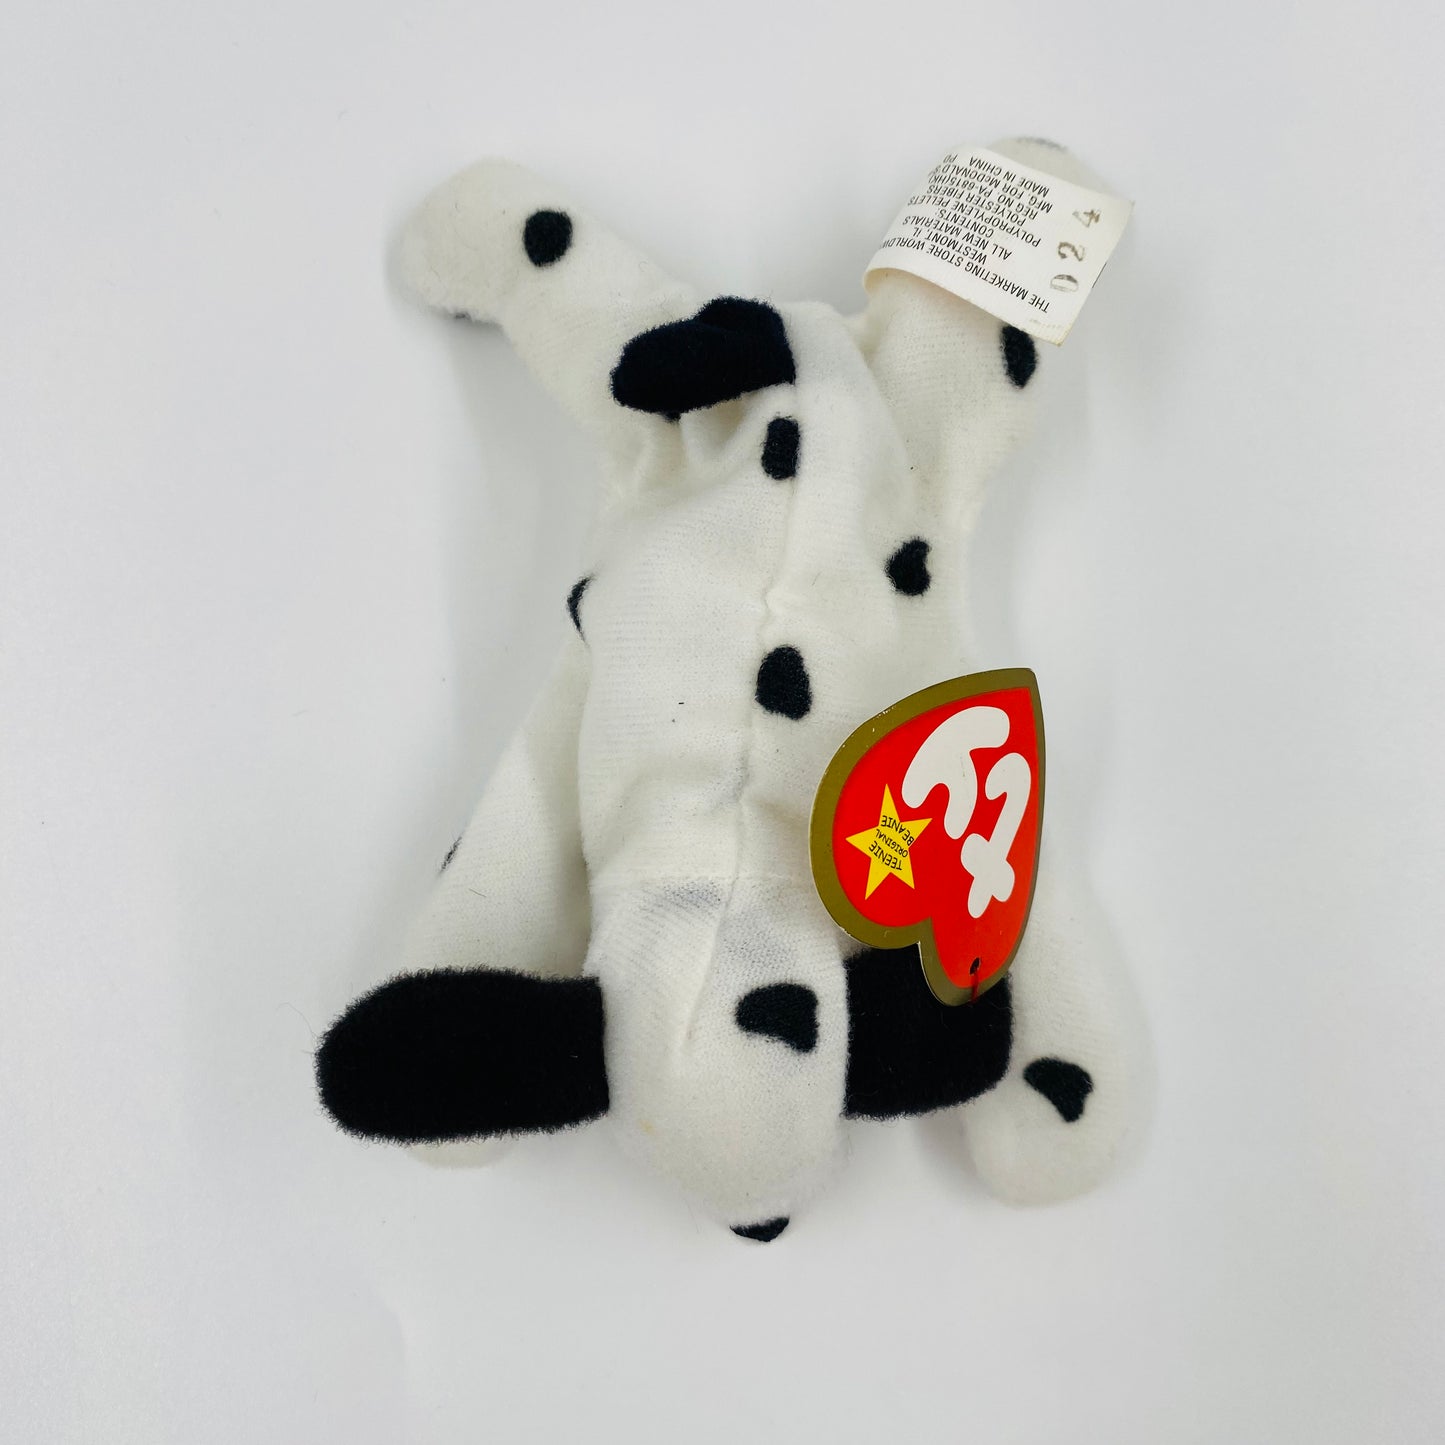 Teenie Beanie Babies Dotty the Dalmatian McDonald's Happy Meal bean bag plush toy animal (2000) loose